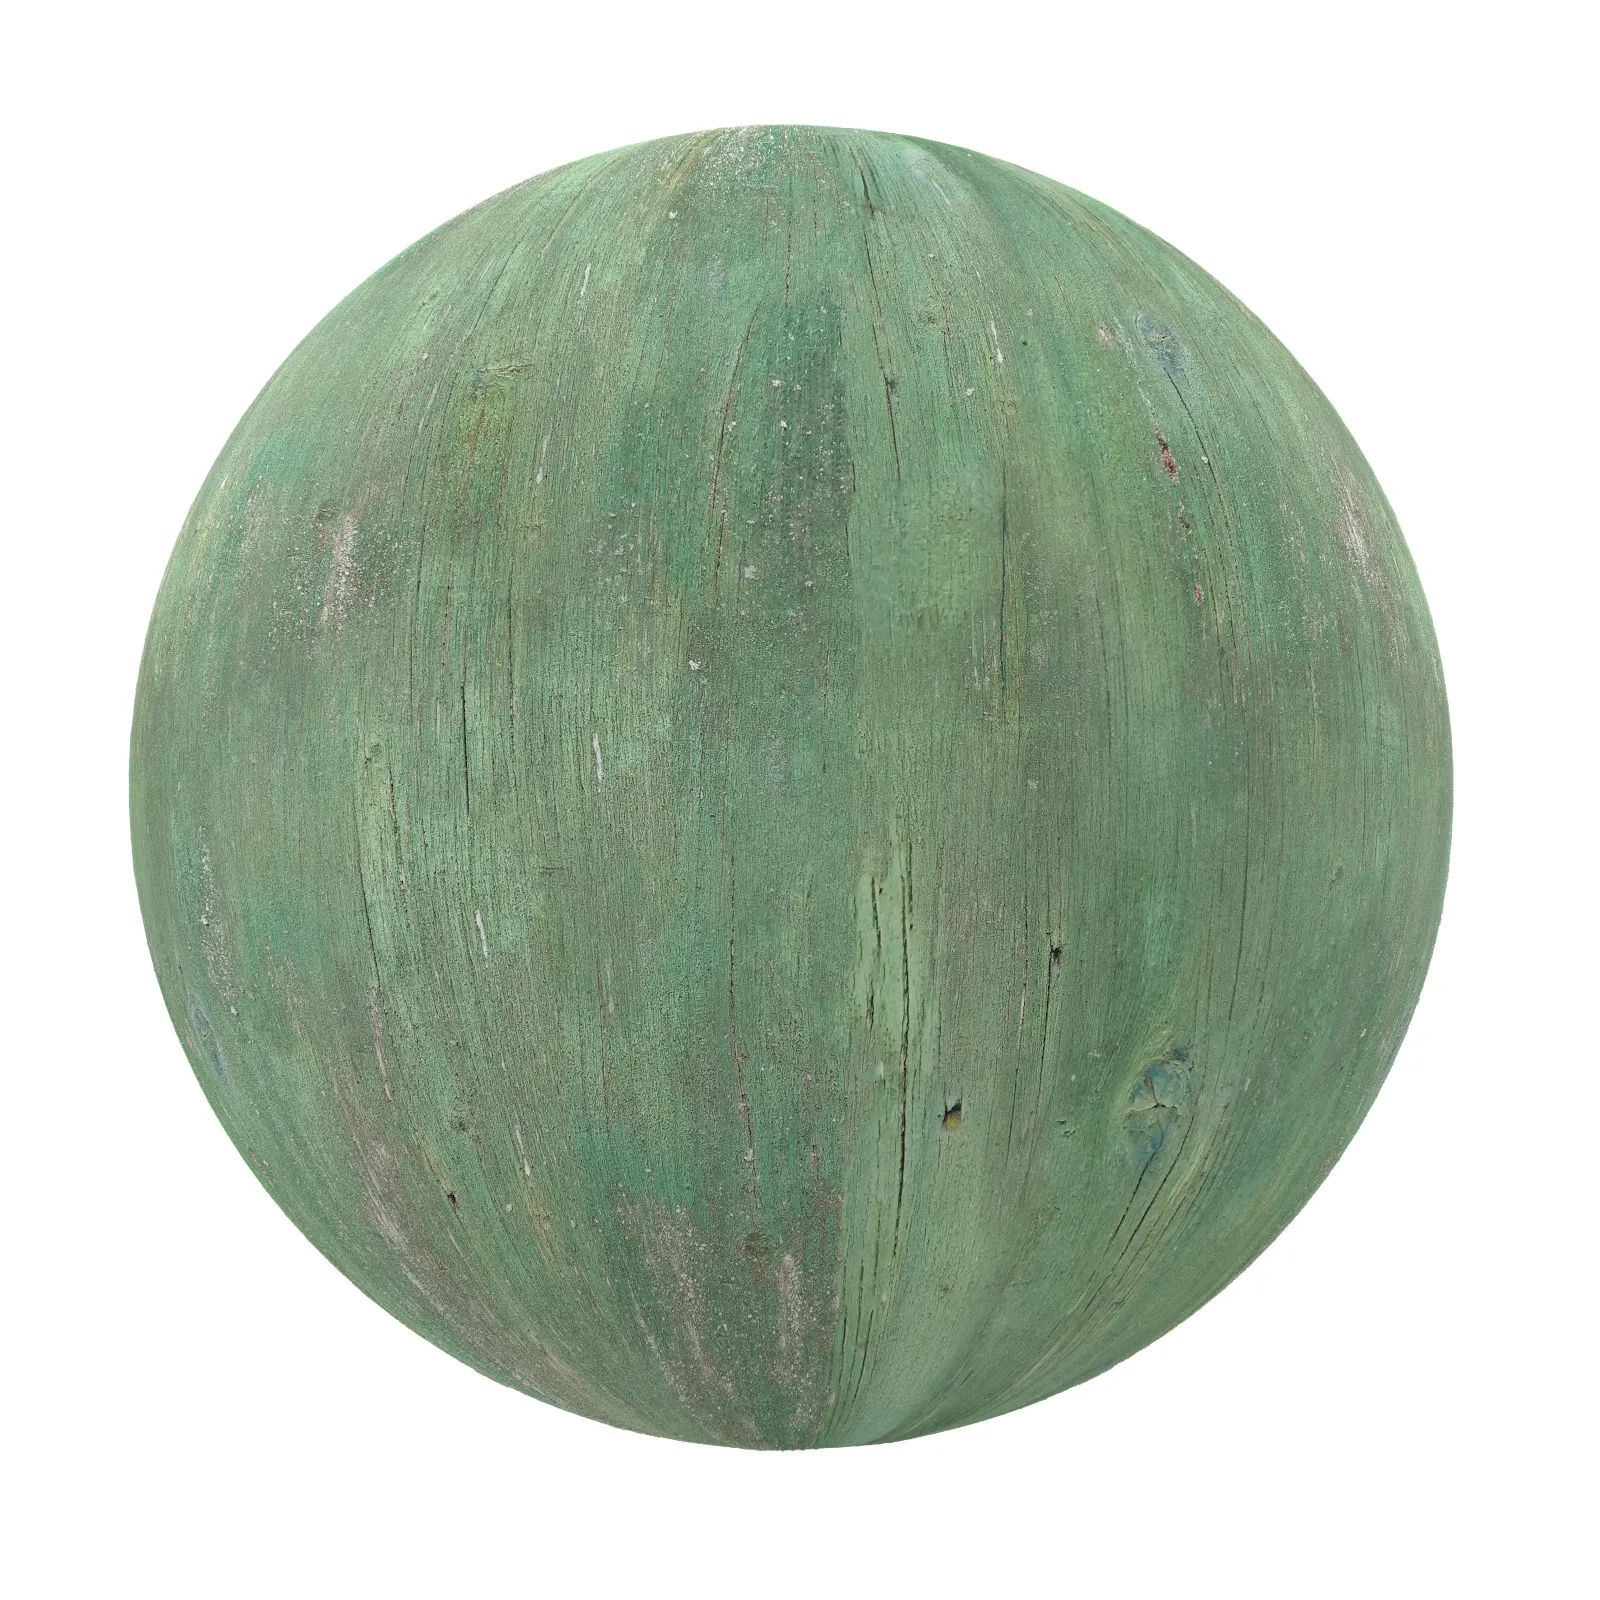 3ds Max Files – Texture – 8 – Wood Texture – 87 – Wood Texture by Minh Nguyen